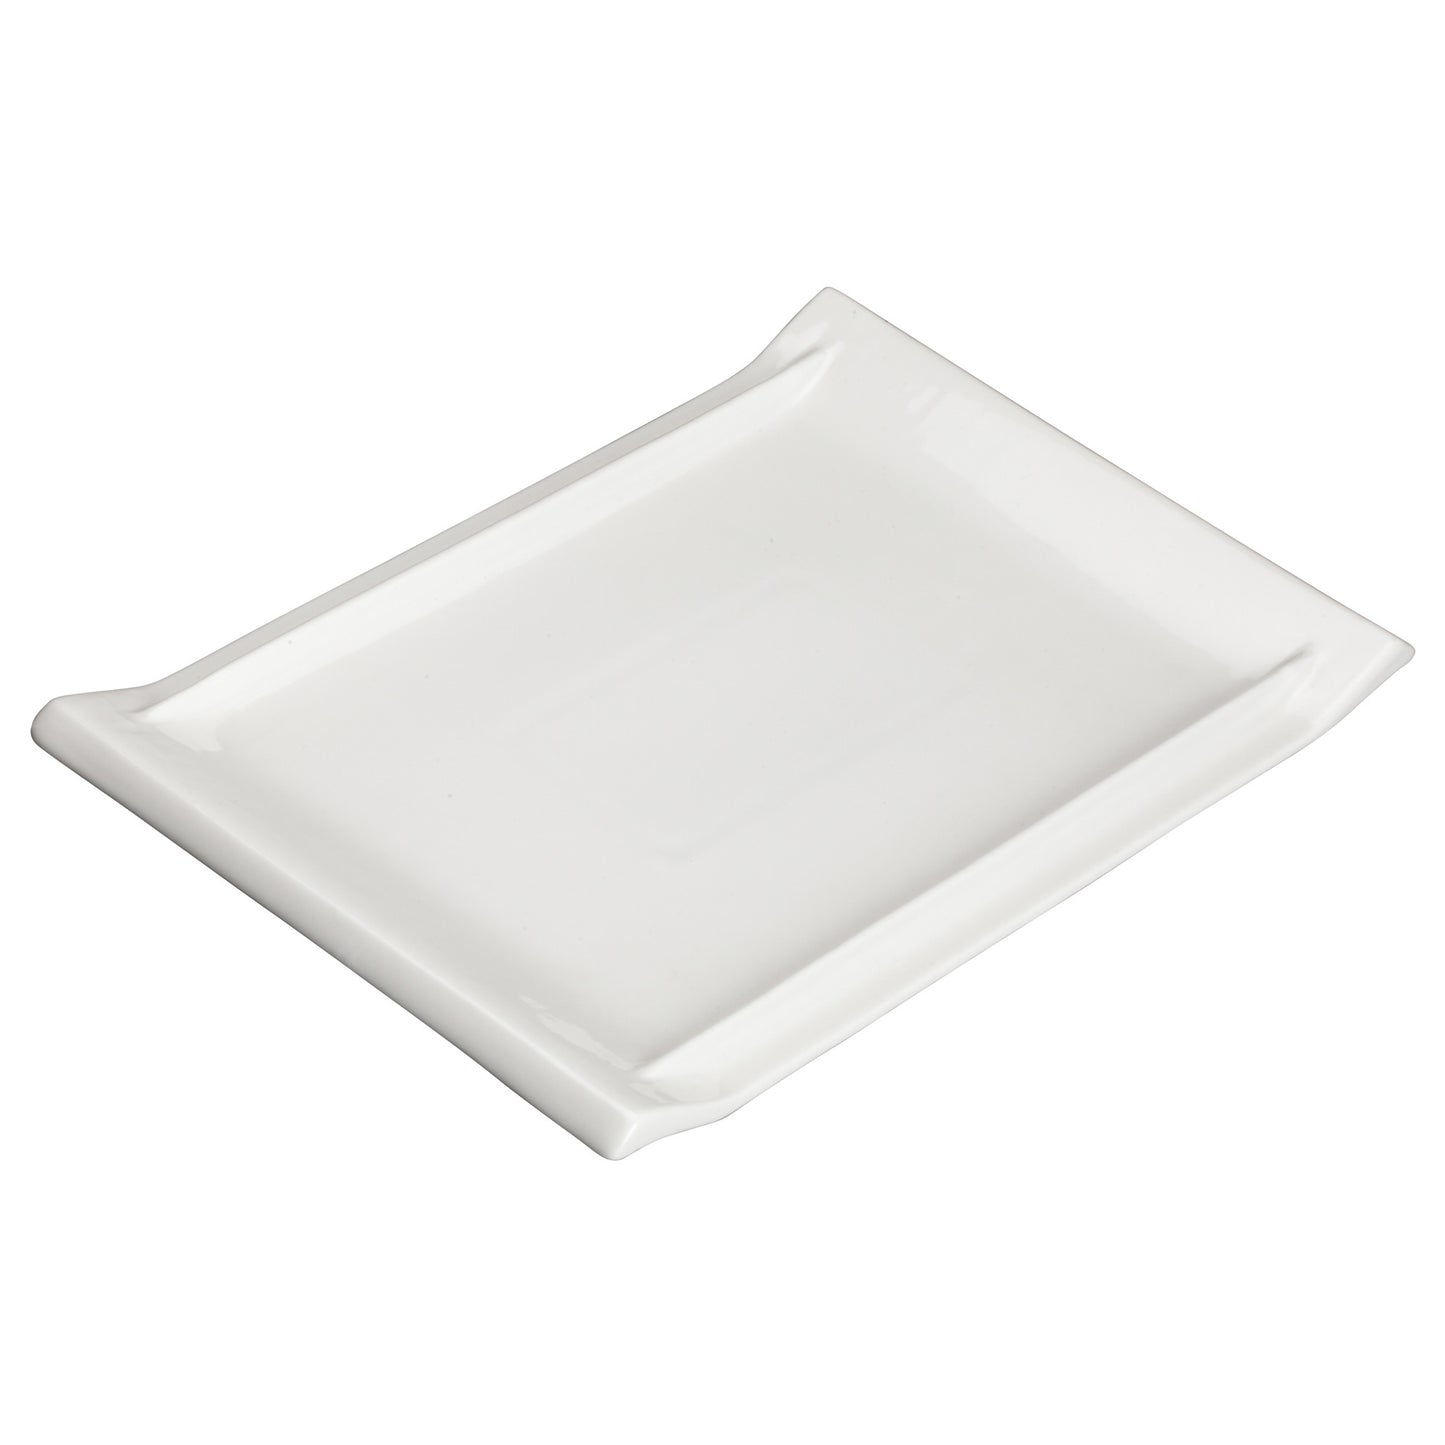 WDP017-113 - 13-7/8" x 9-1/4" Porcelain Rectangular Platter, Bright White, 12 pcs/case